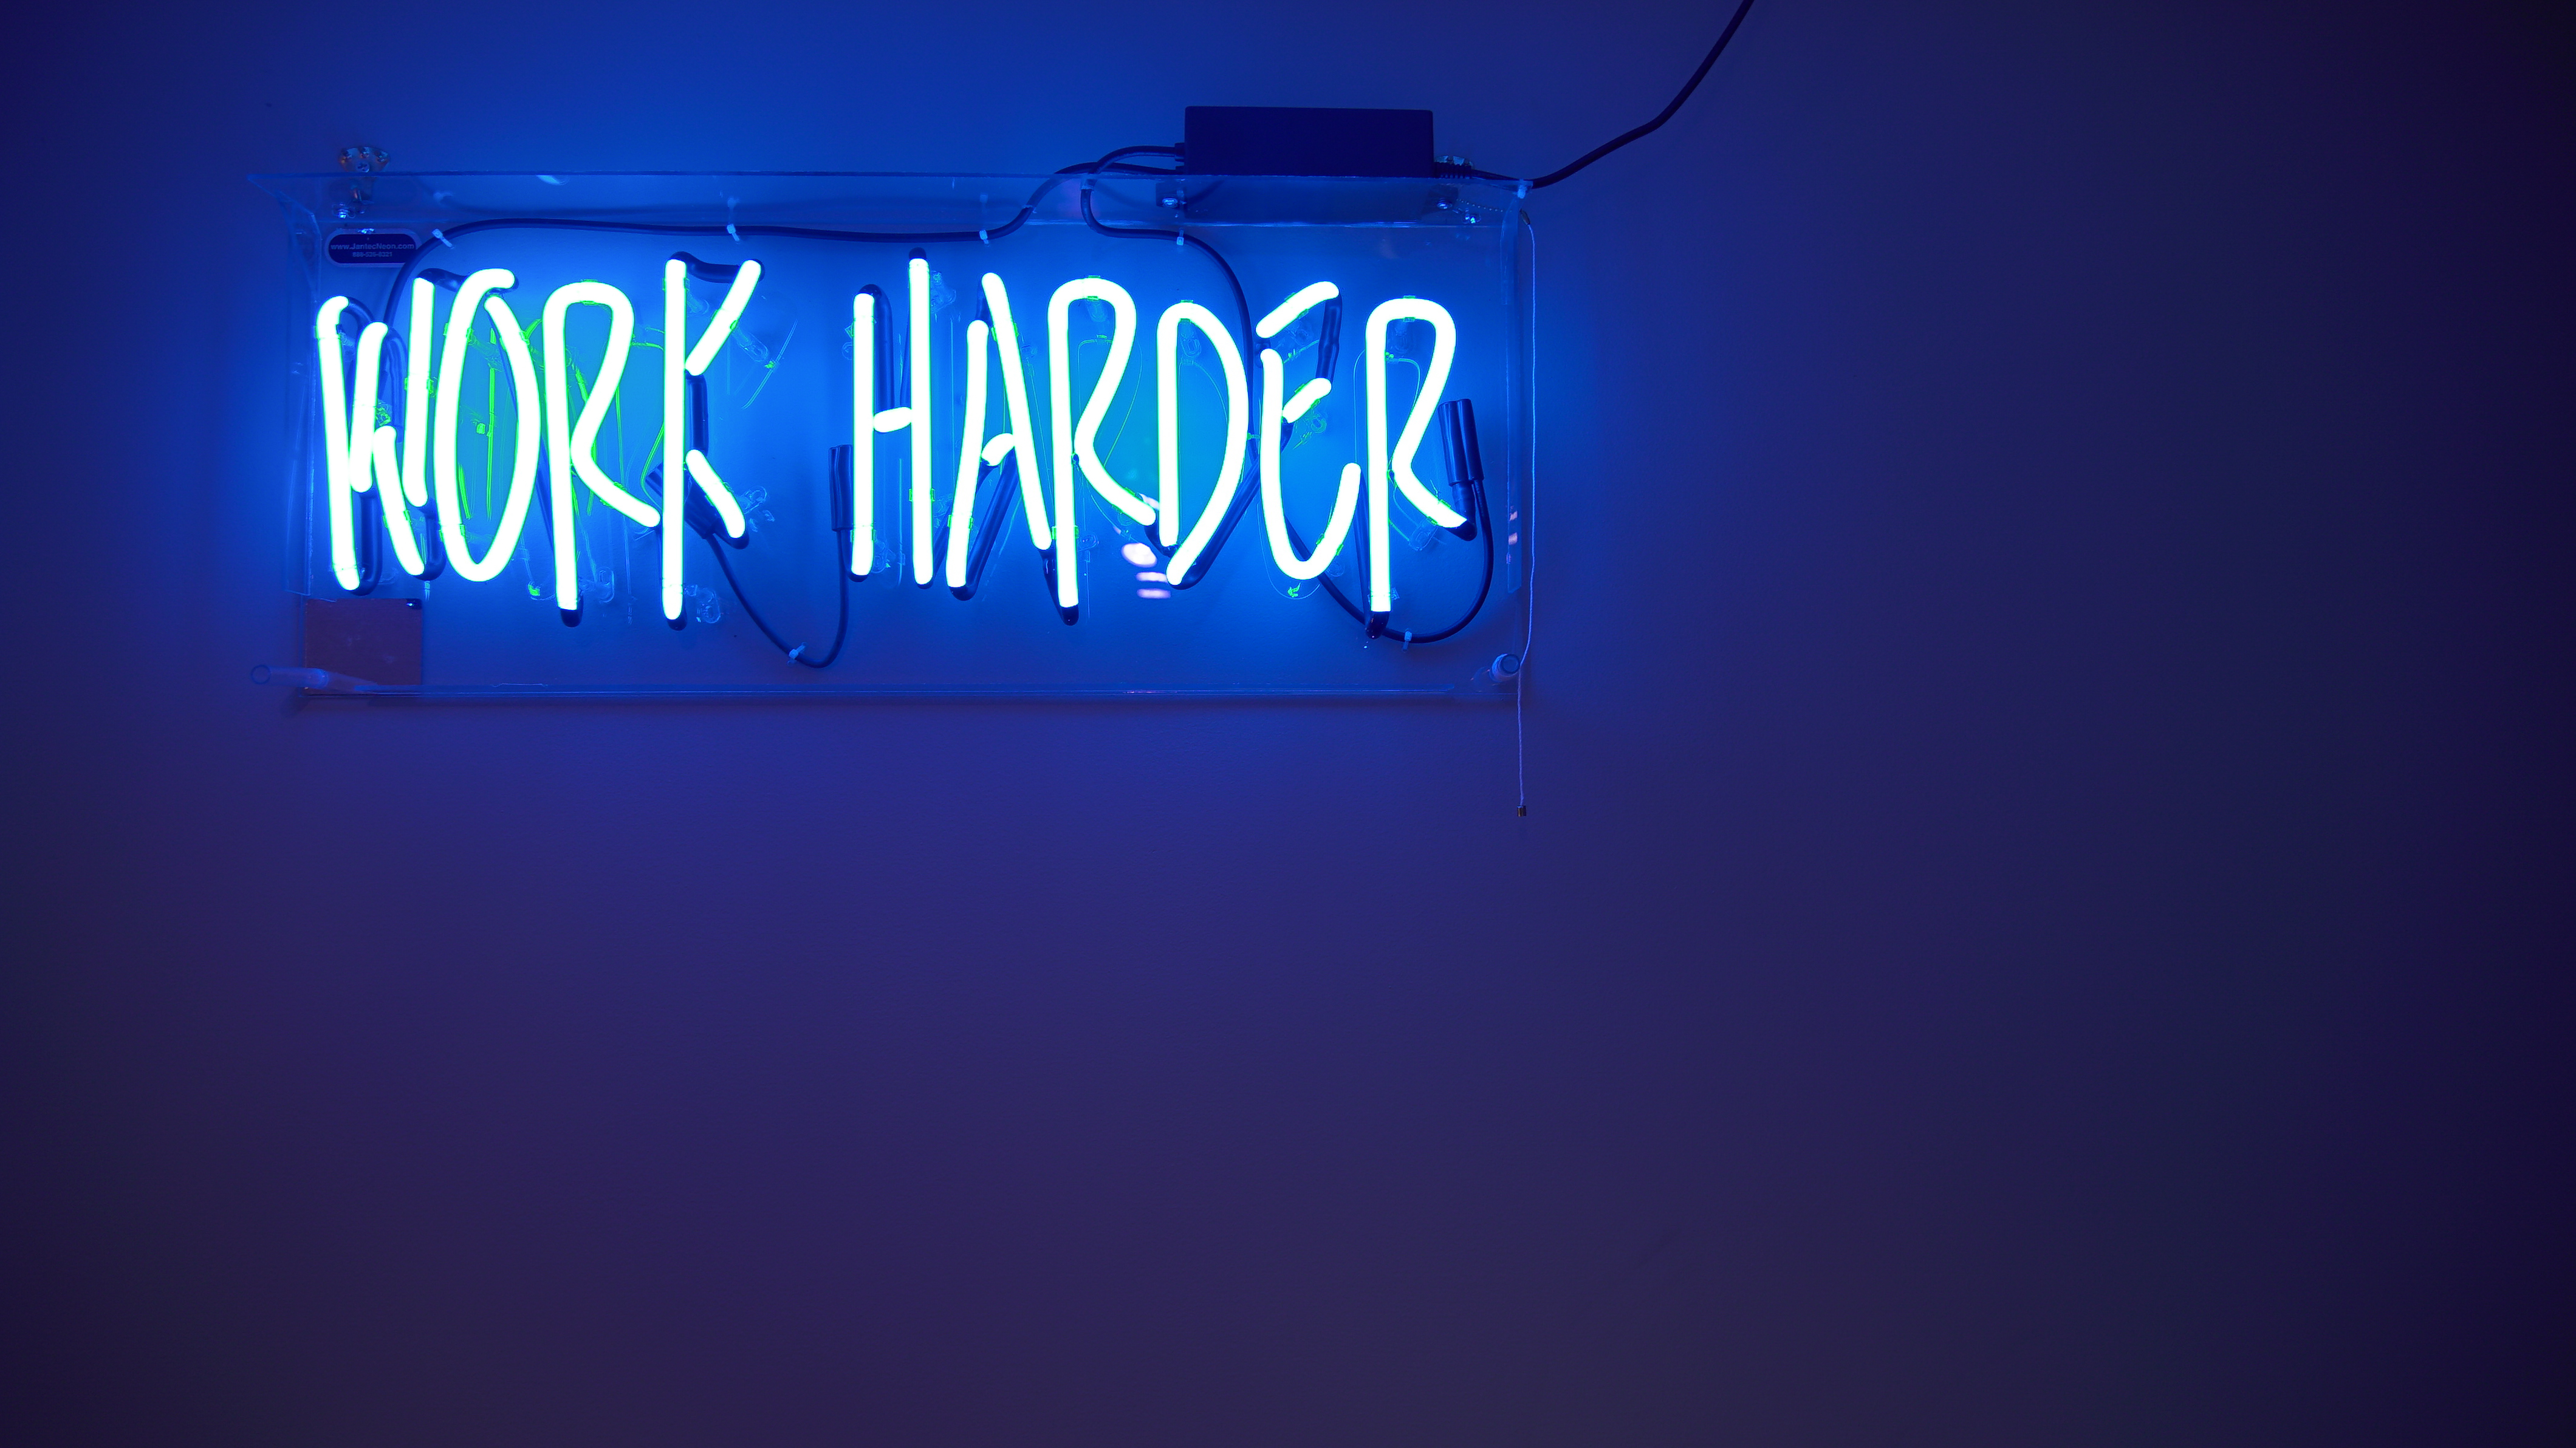 Work harder Wallpaper 4K, Neon Lights, Quotes, #2453